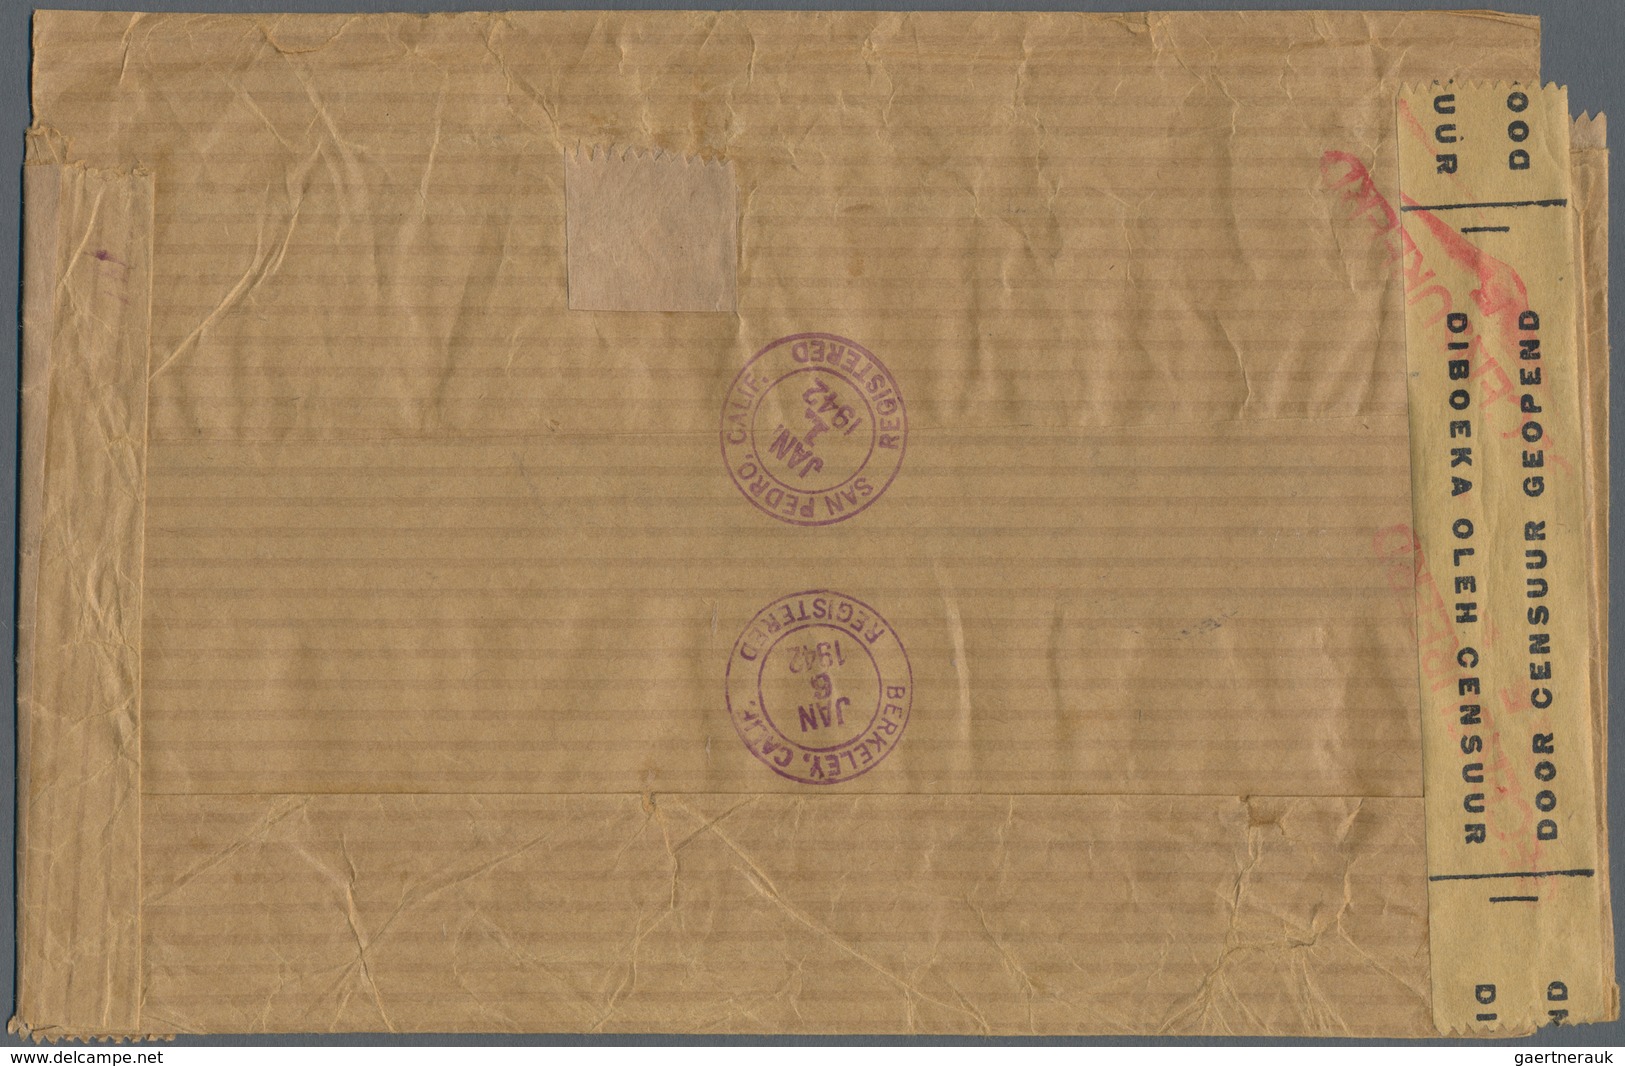 Niederländisch-Indien: 1941. Registered Envelope Endorsed 'Printed Matter' Addressed To California B - Netherlands Indies